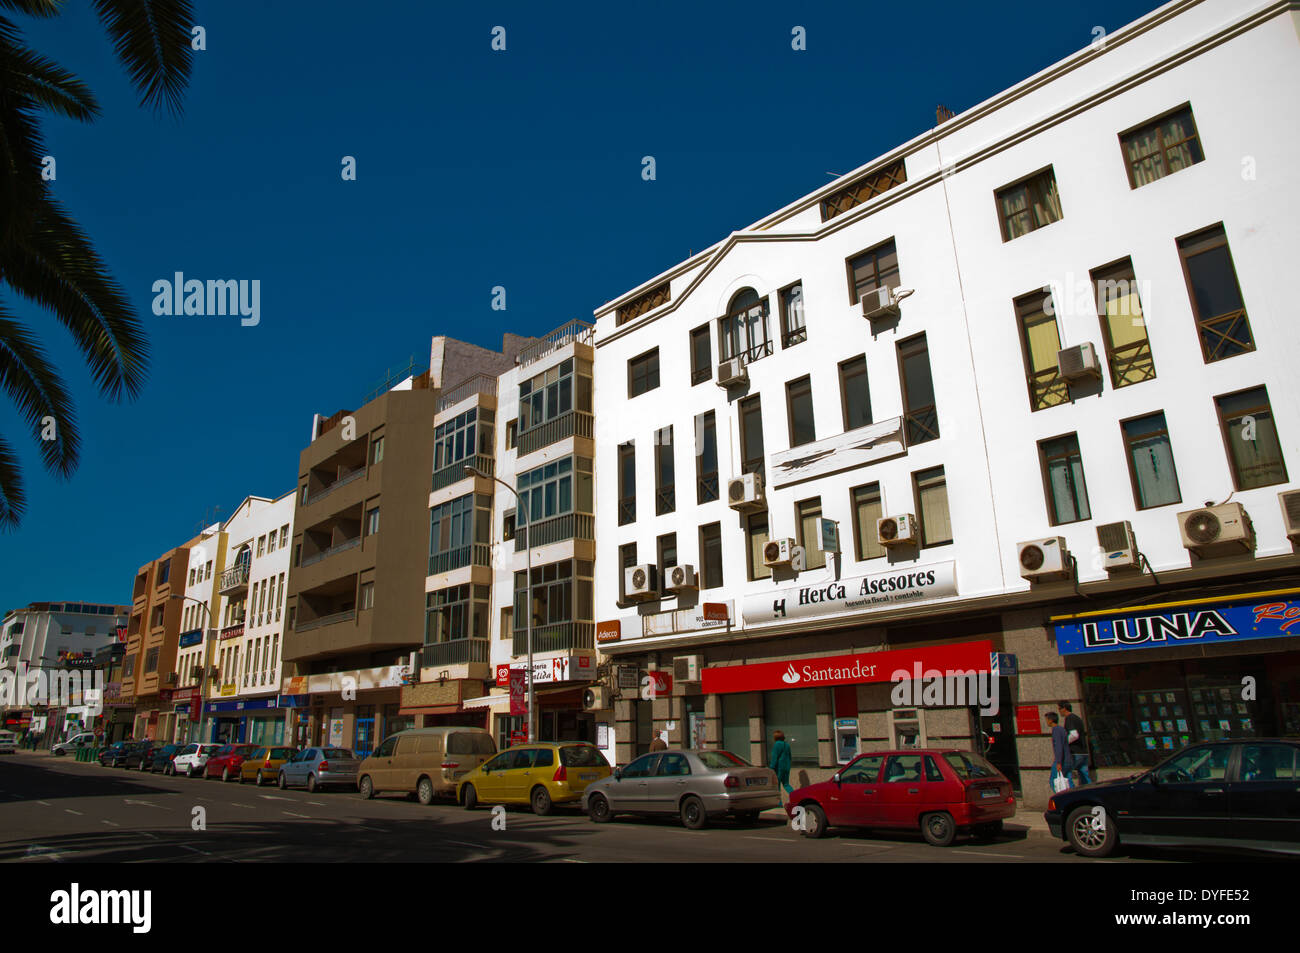 Calle Jose Antonio street, central Arrecife, Lanzarote, Canary Islands, Spain, Europe Stock Photo